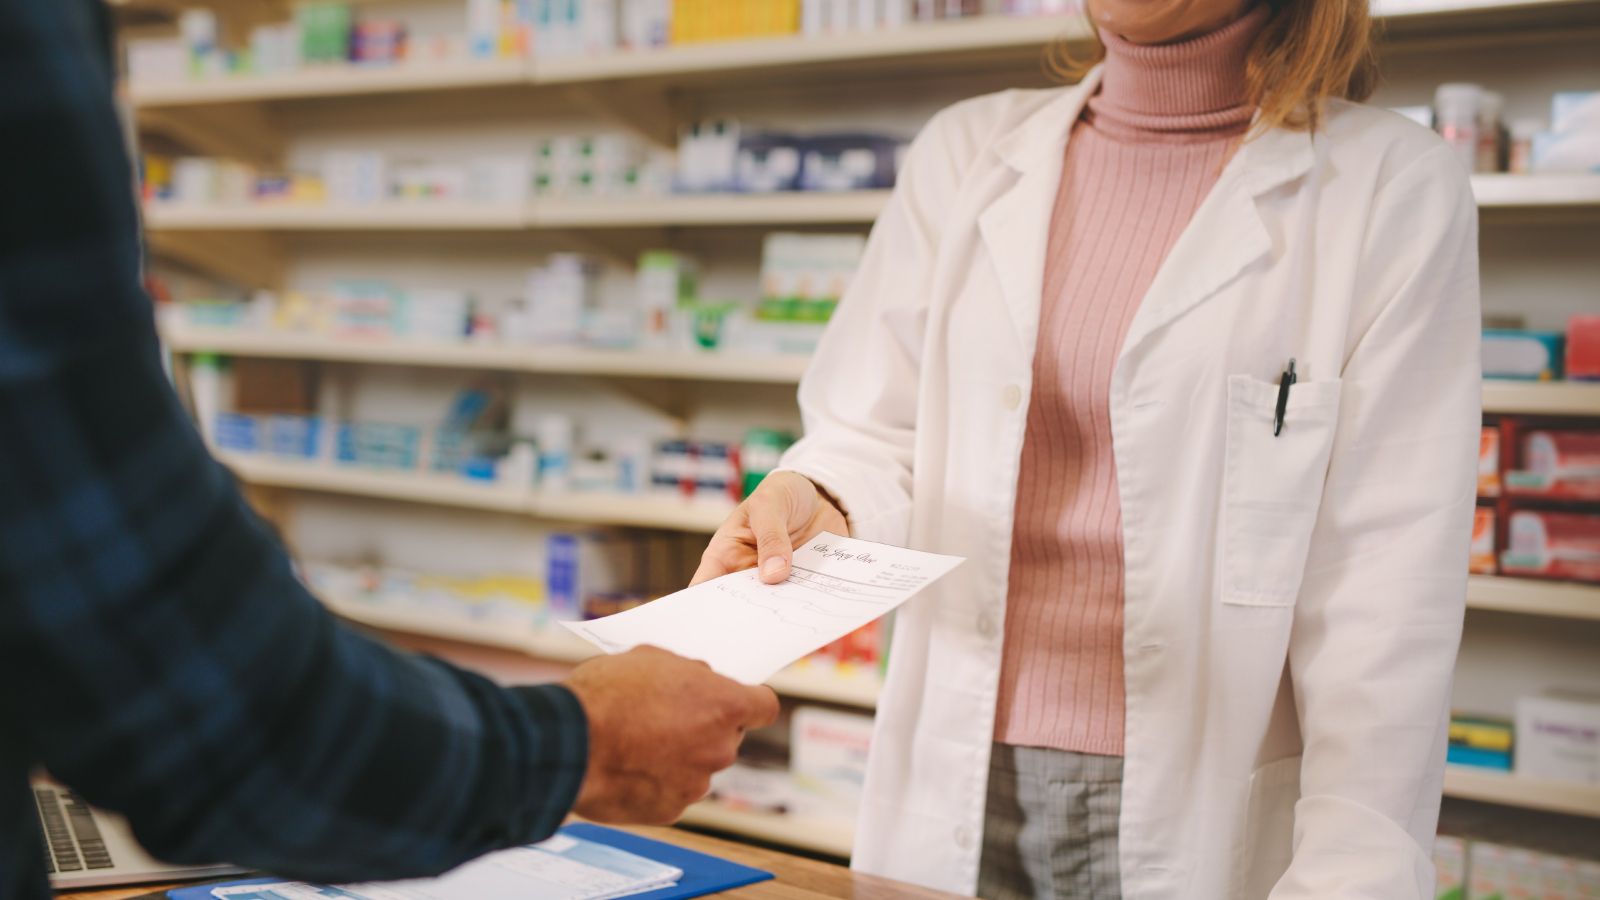 A pharmacist serving a customer